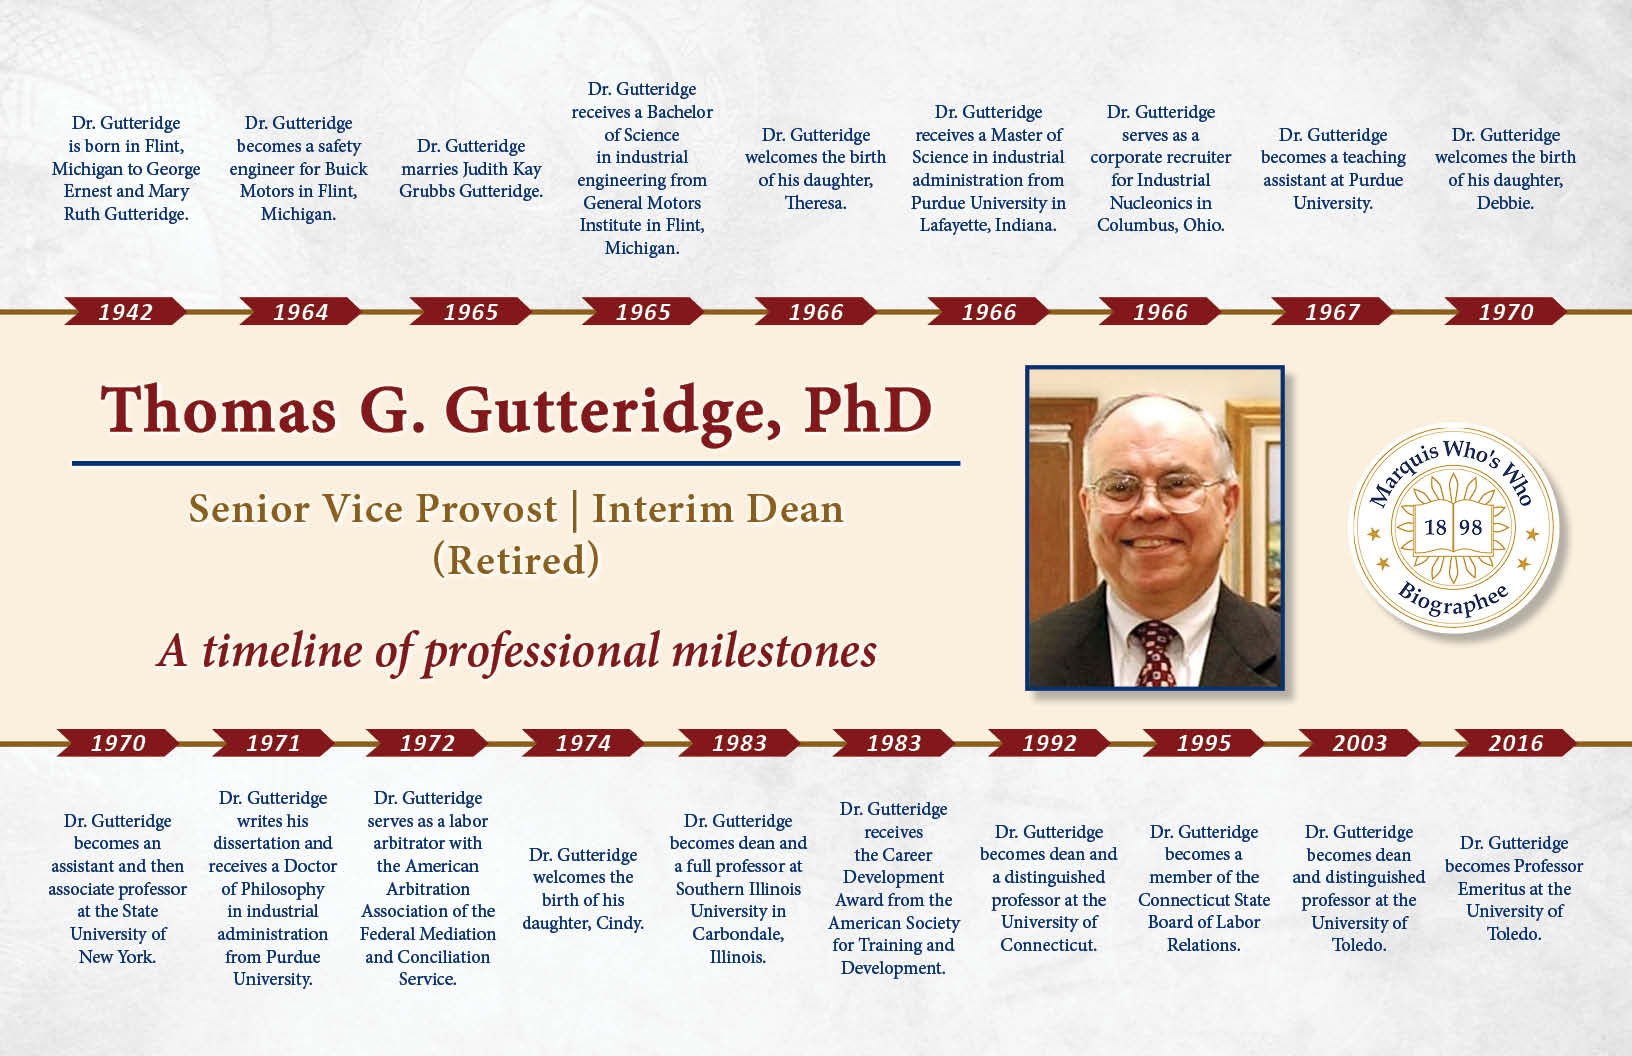 Thomas Gutteridge Professional Milestones